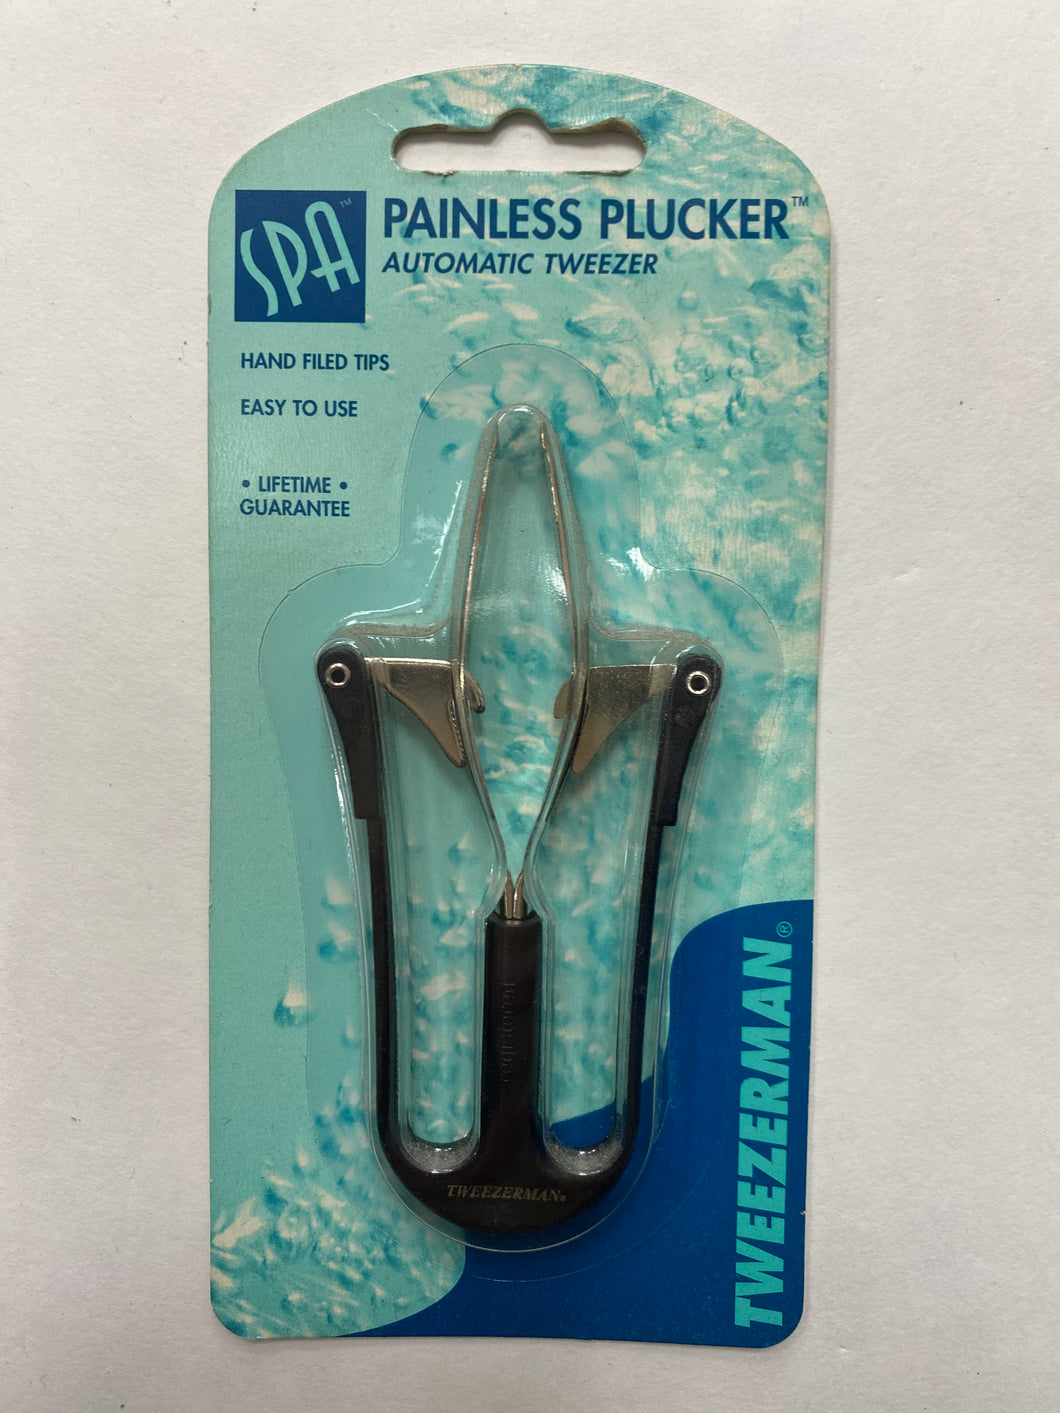 Spa Painless Plucker Automatic Tweezer